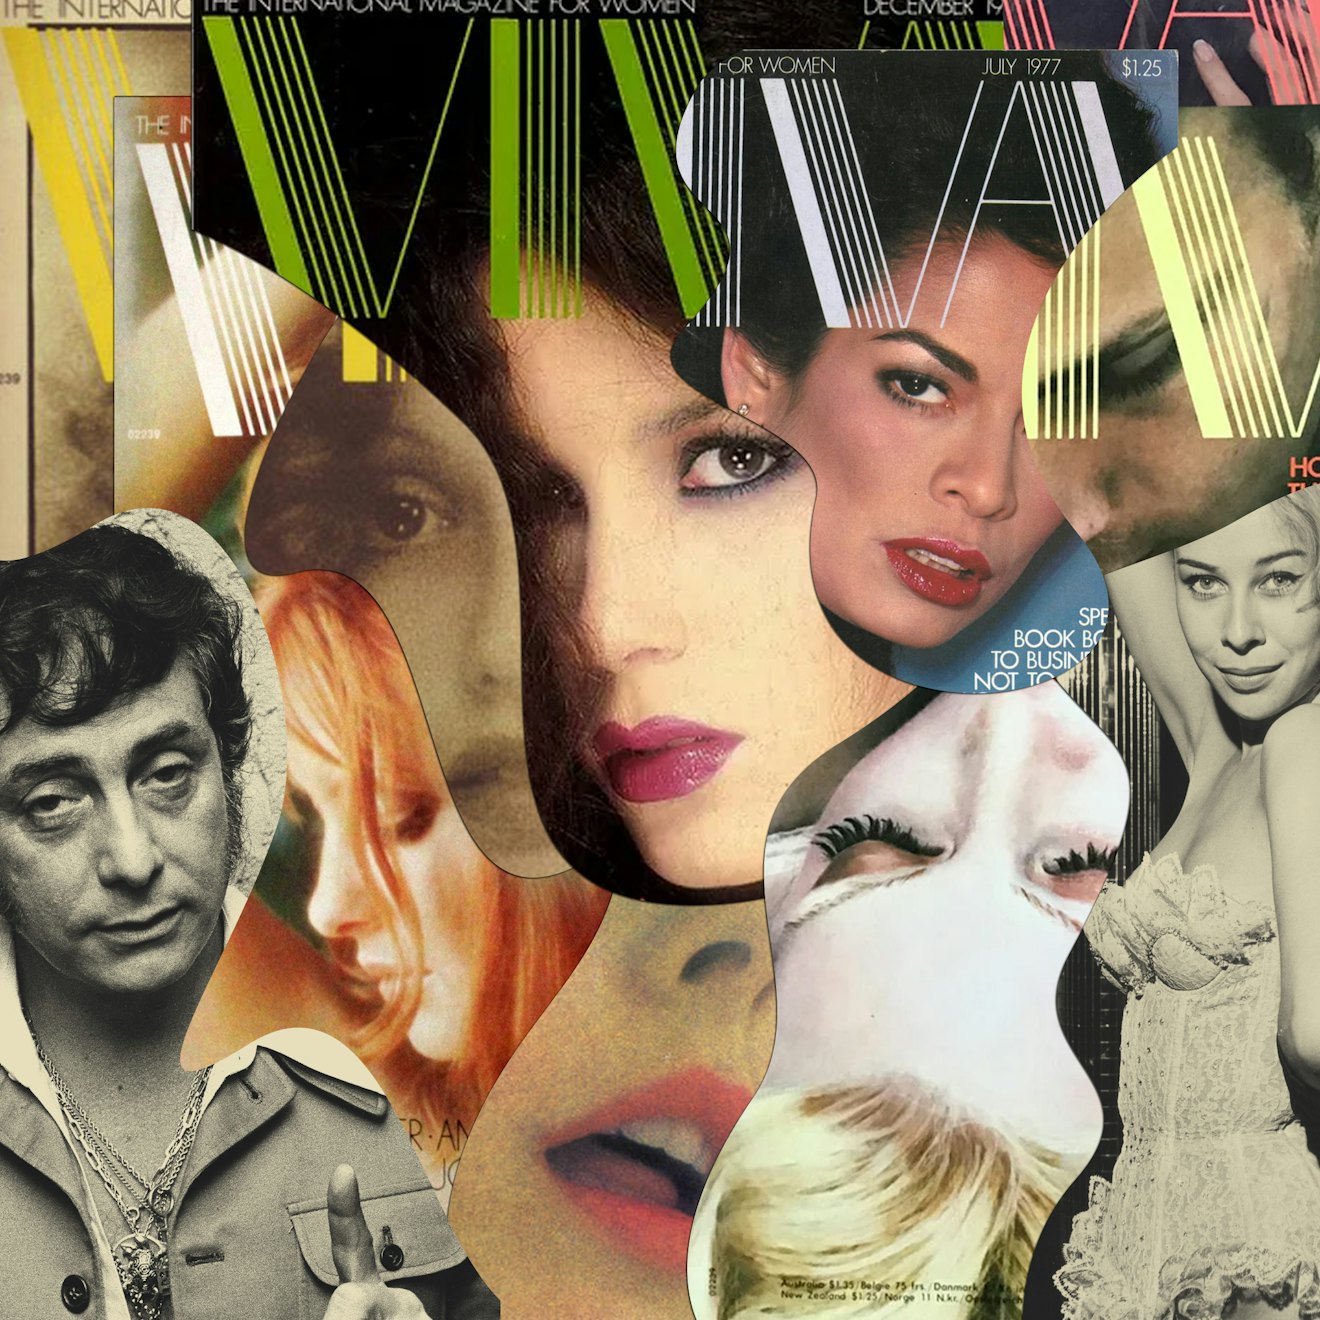 Seventies Porn Music Bad - Stiffed' Recalls 'Viva,' A 1970s Porn Magazine For Women